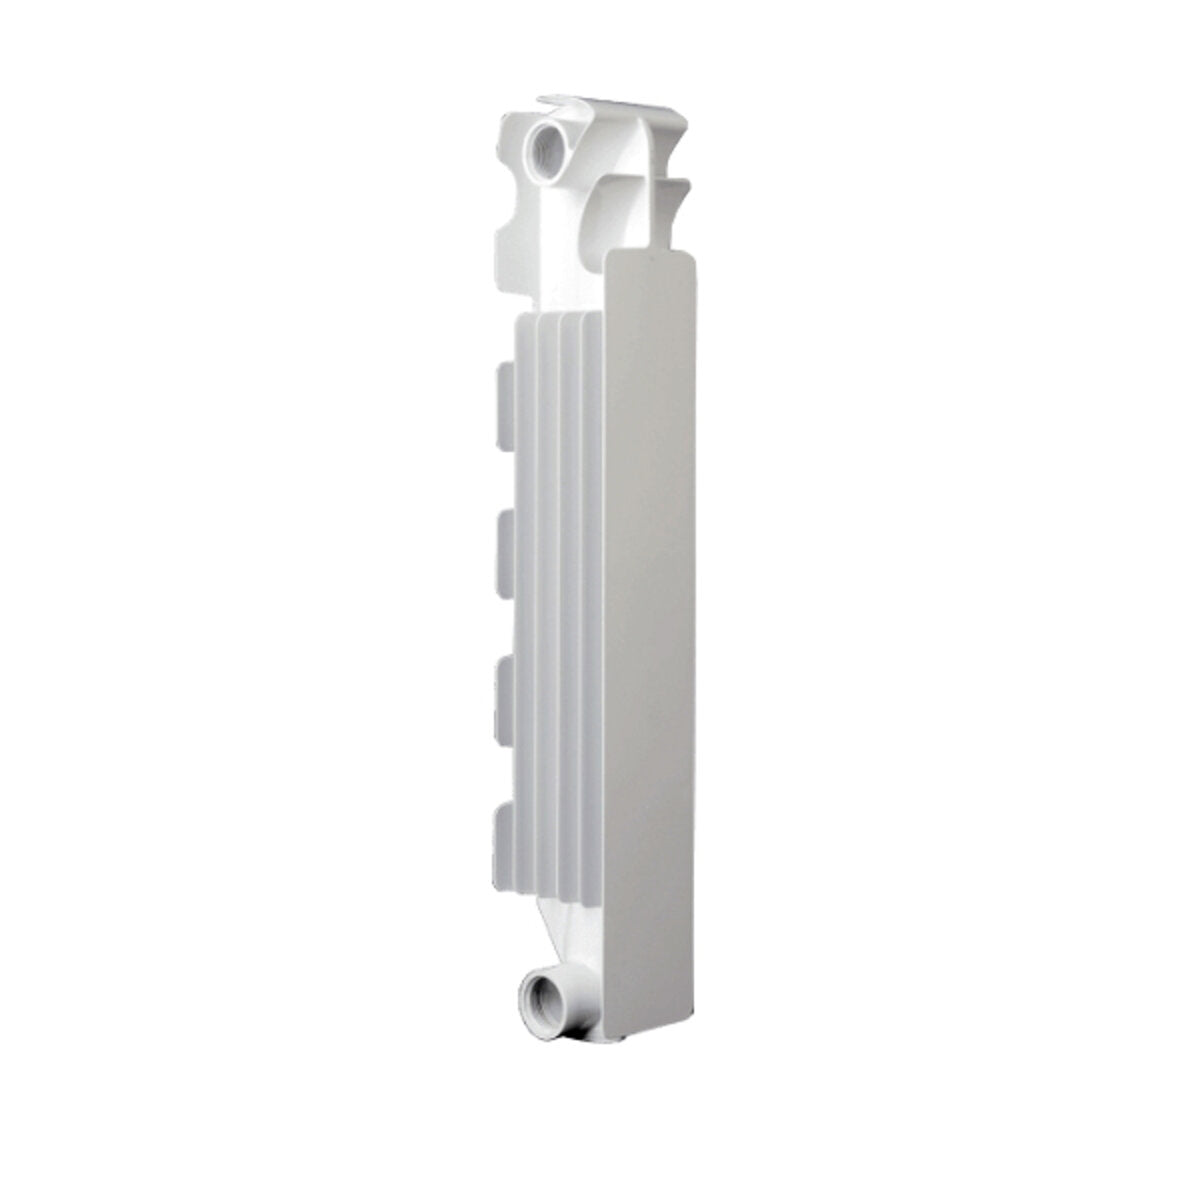 Fondital radiator in die-cast aluminum calidor super b4 4 elements center distance 350 mm